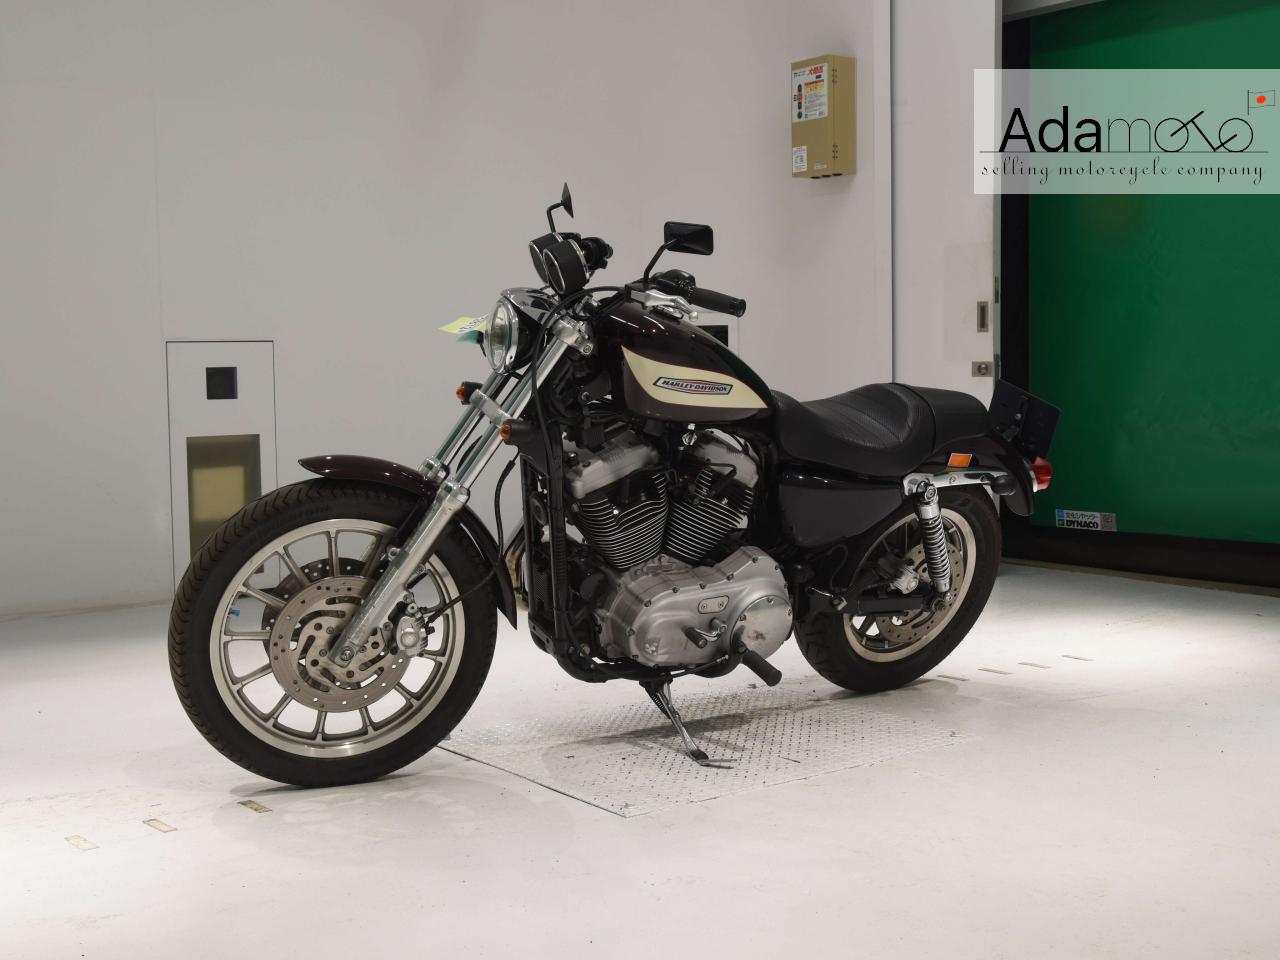 Harley Davidson XL1200R - Adamoto - Motorcycles from Japan